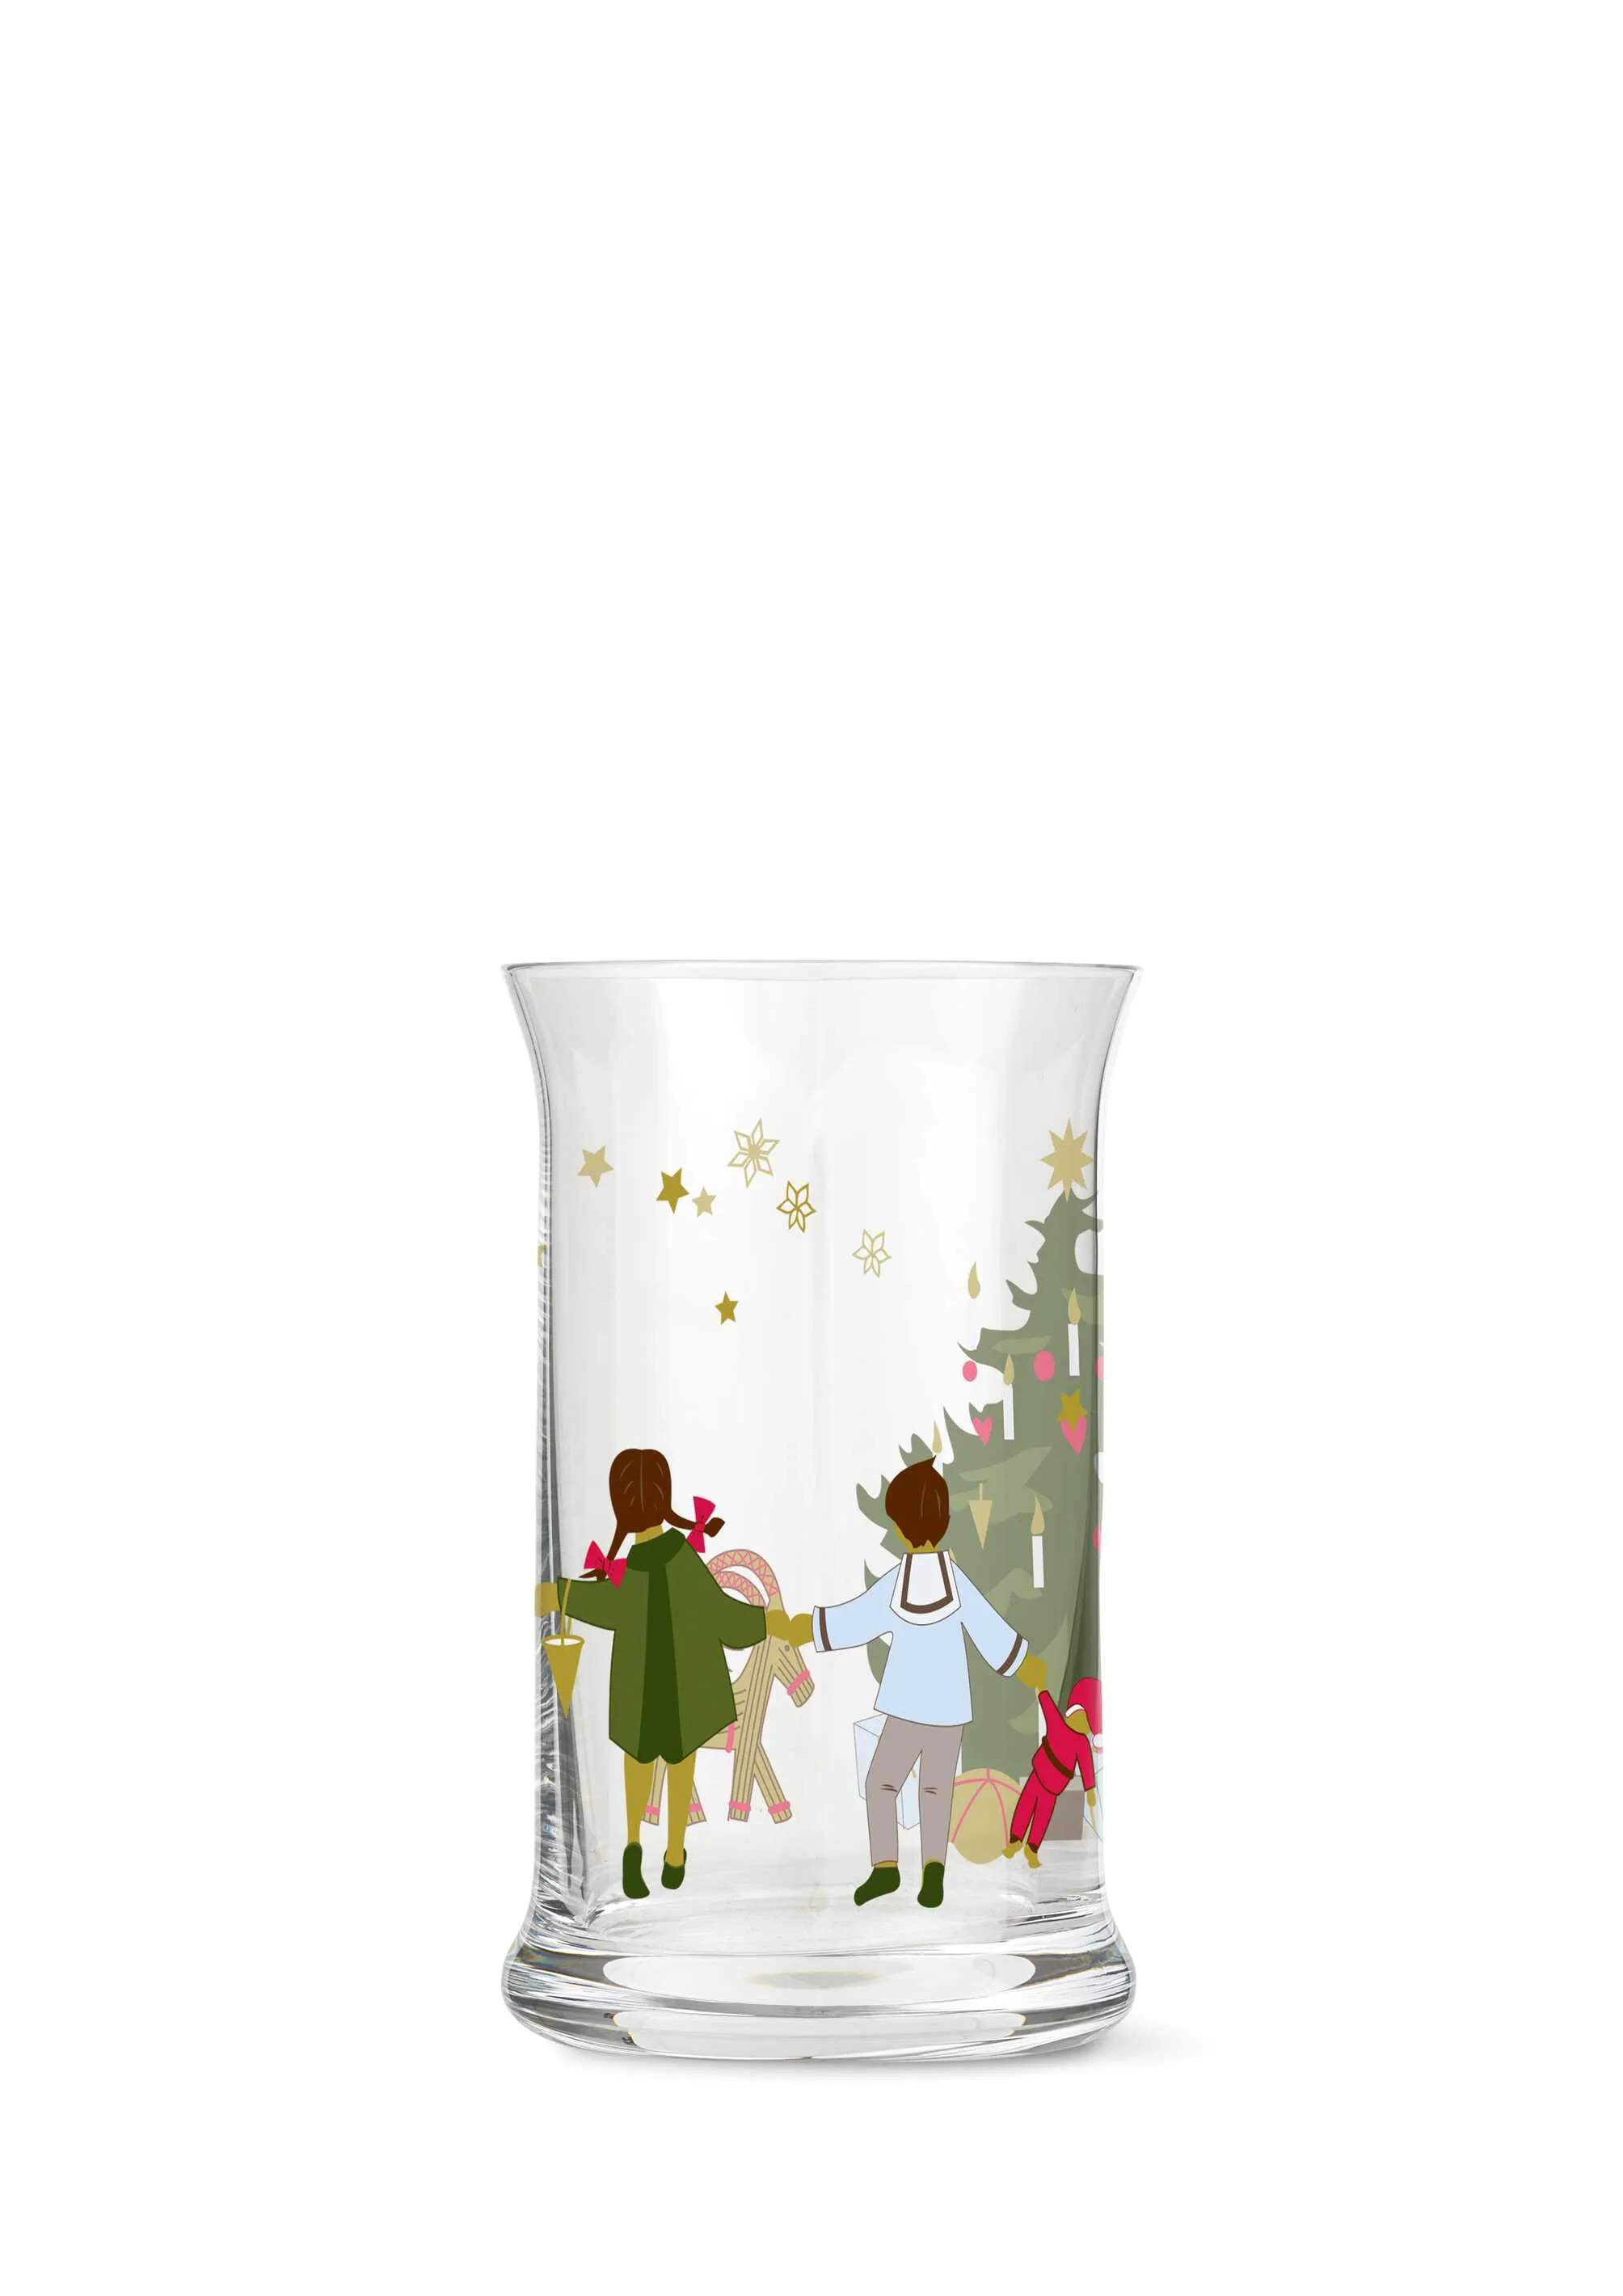 Christmas Julevandglas 2022